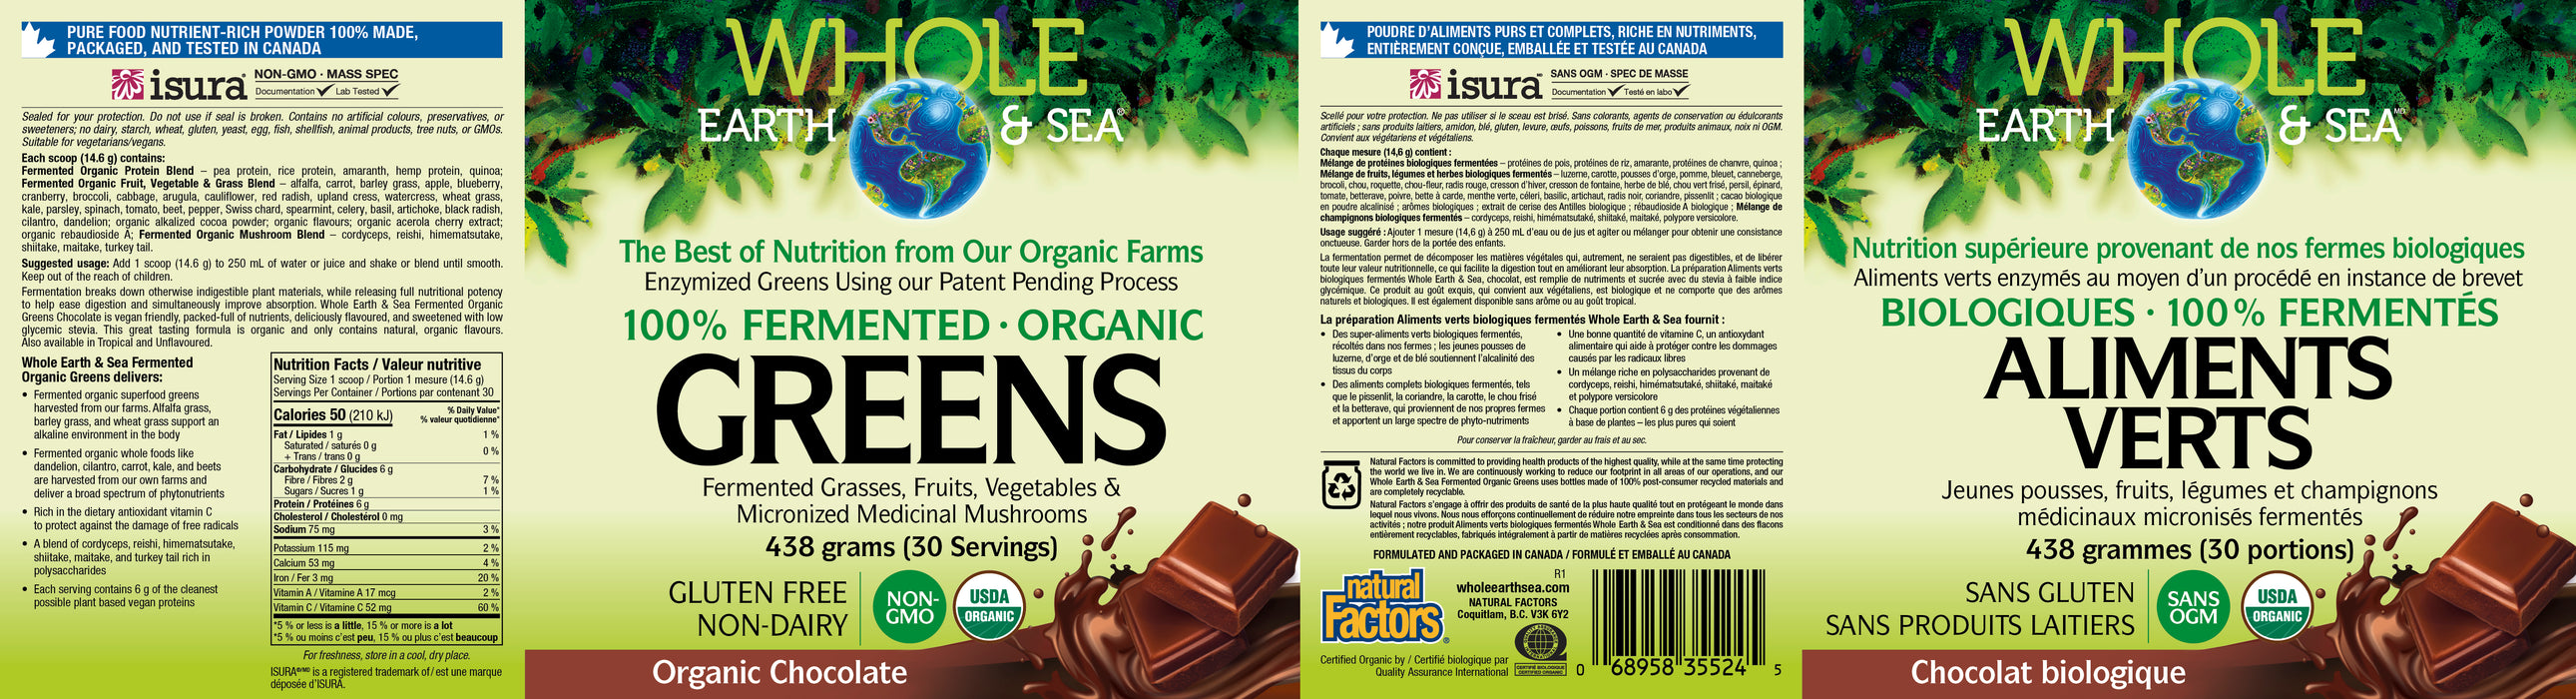 Whole Earth & Sea 100% Fermented Organic Greens - Chocolate 438g